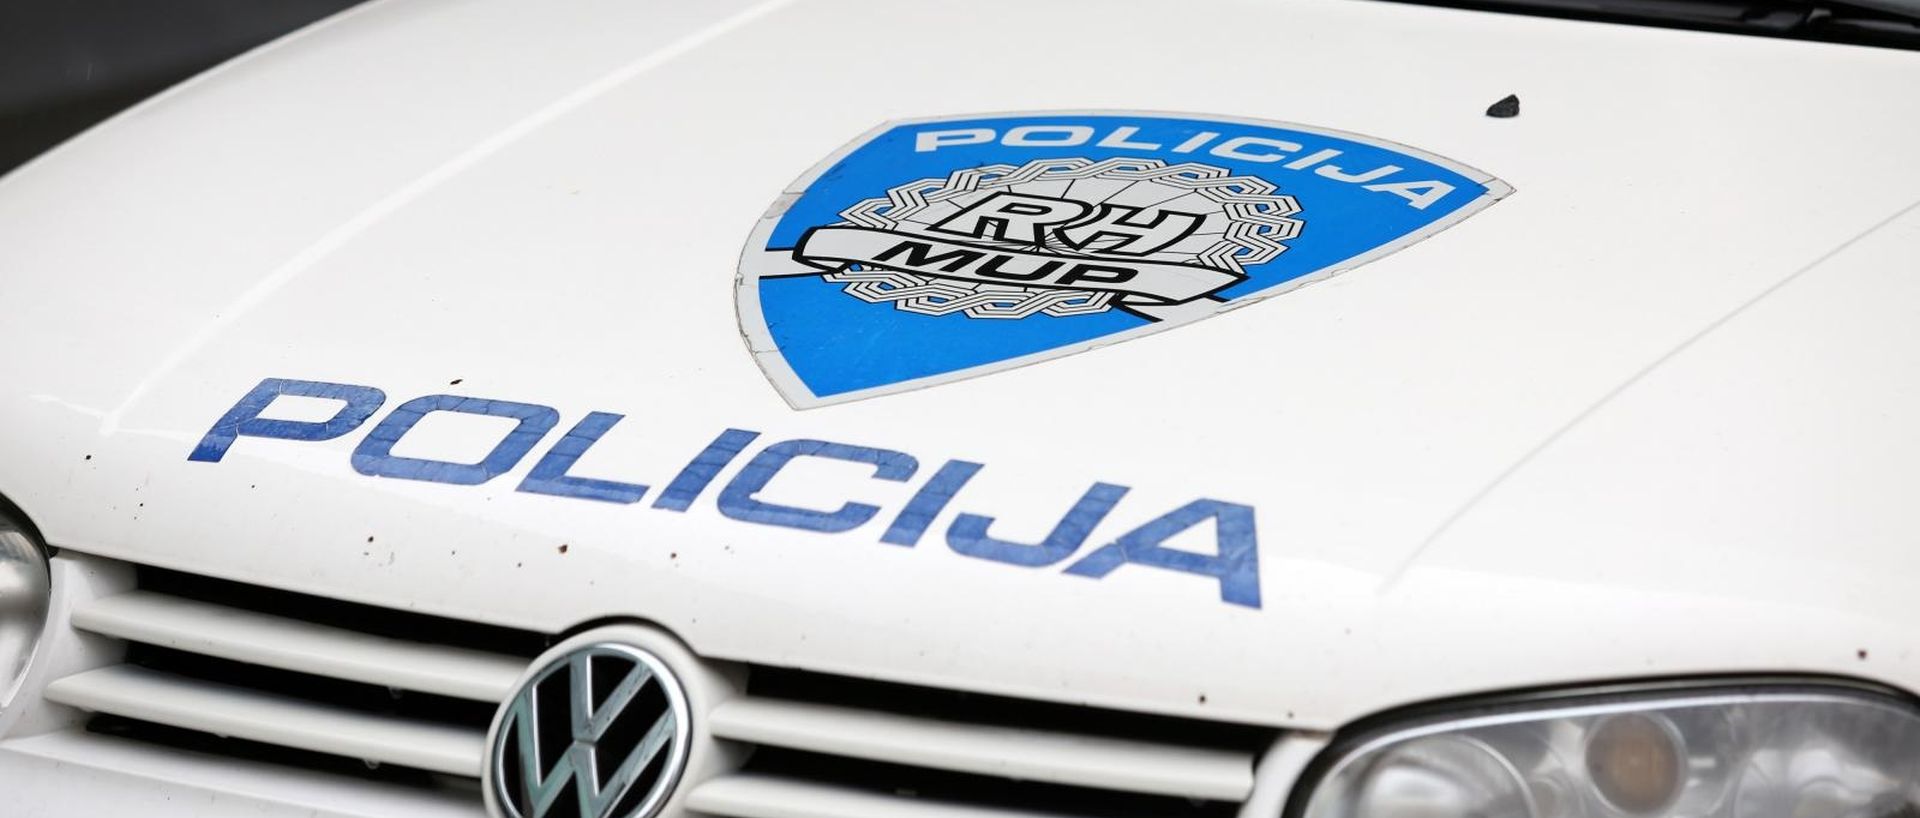 06.03.2018., Sibenik -
Policijski automobili.
Photo: Dusko Jaramaz/PIXSELL